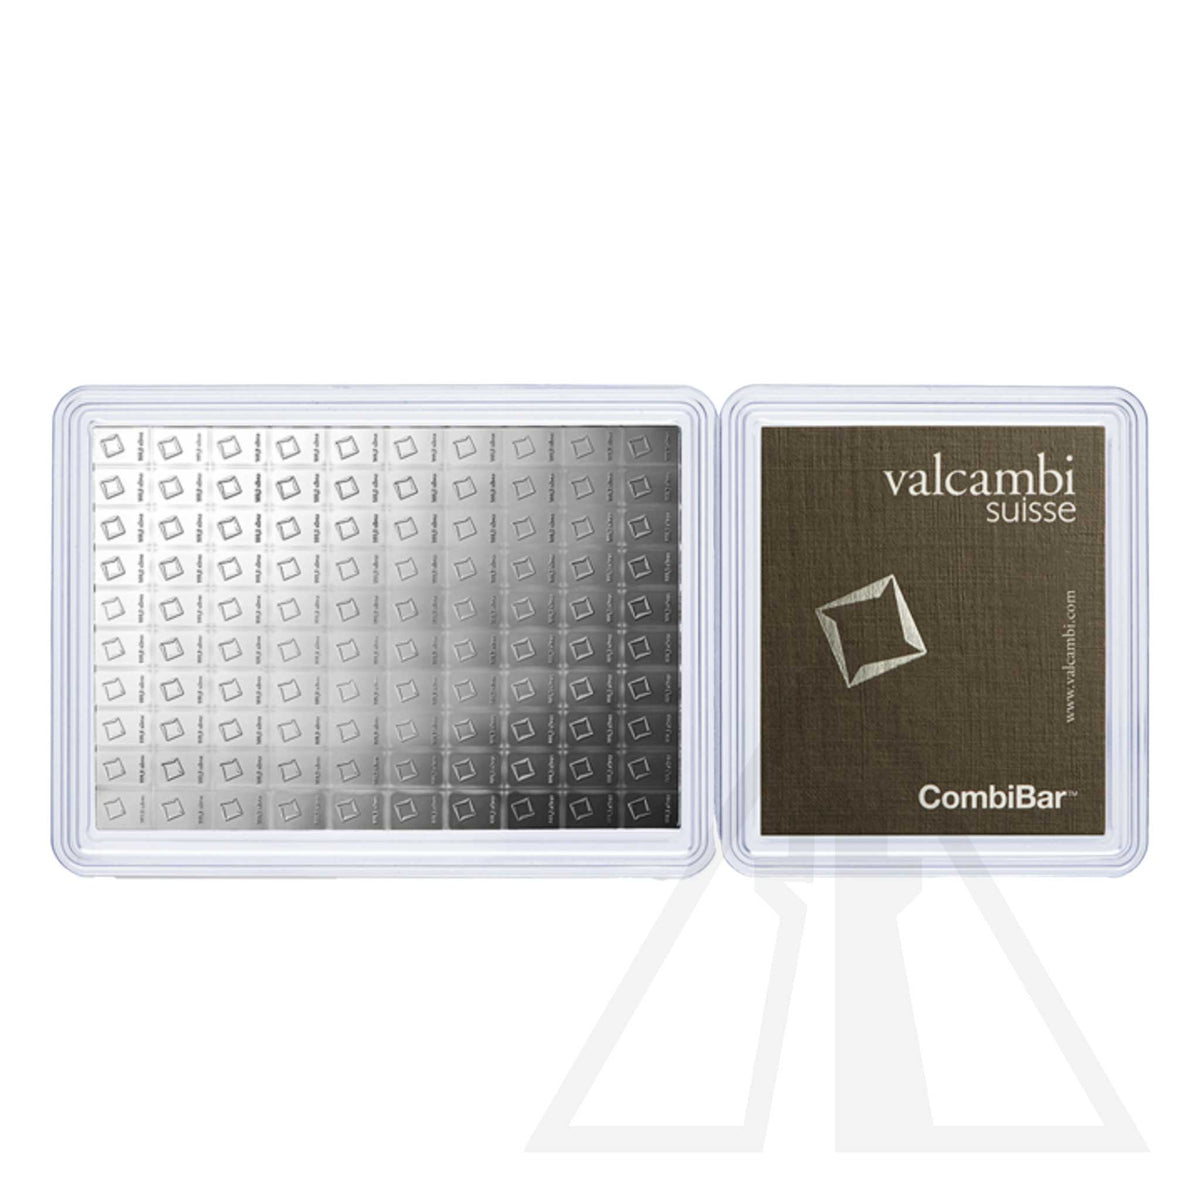 100 gram (100 x 1 g) Valcambi CombiBar Silver Bar